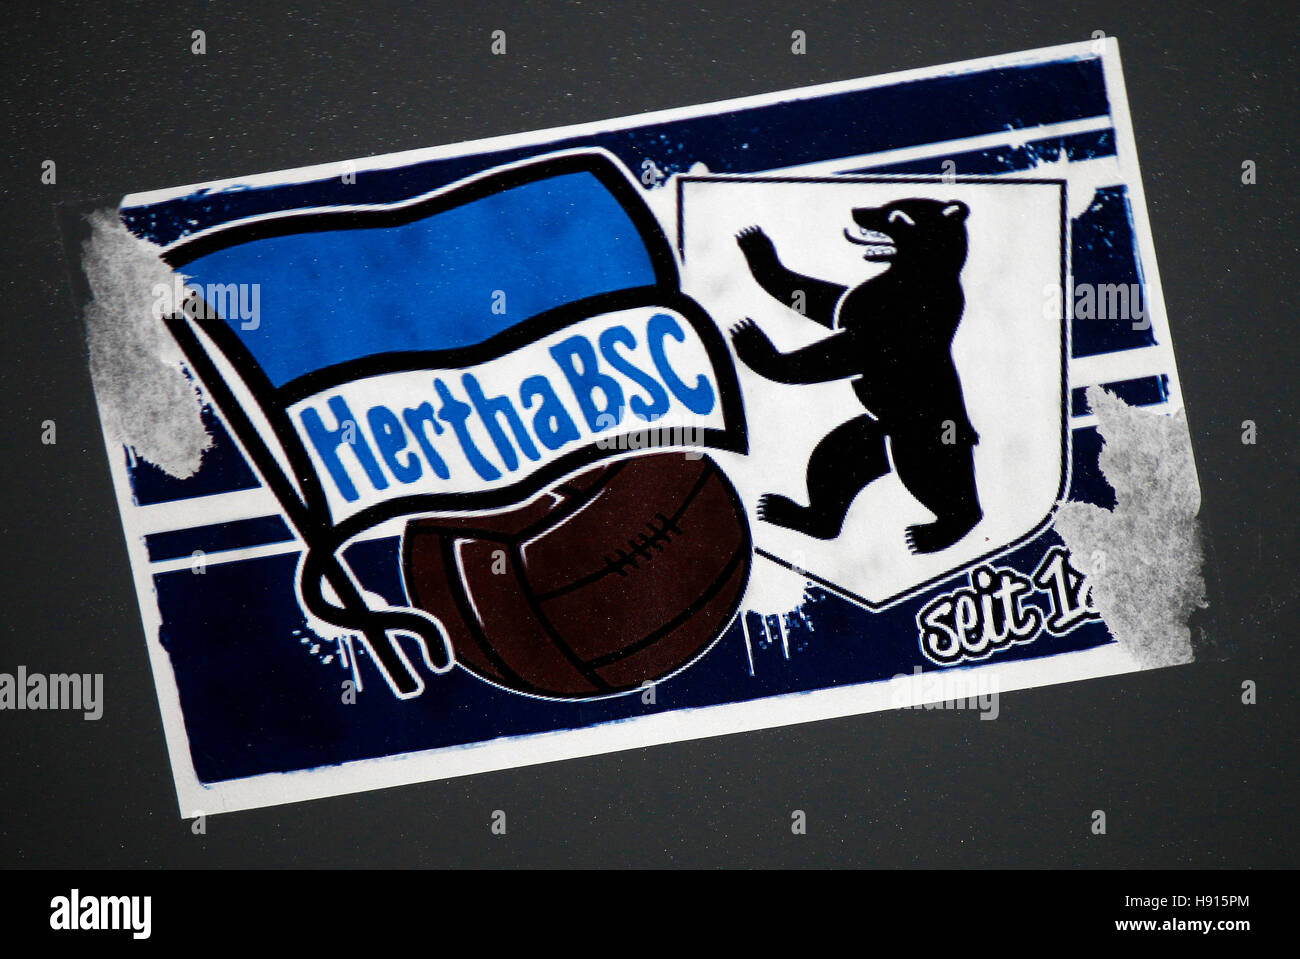 Das Logo der Marke "Hertha BSC Berlin", Berlin. Stockfoto